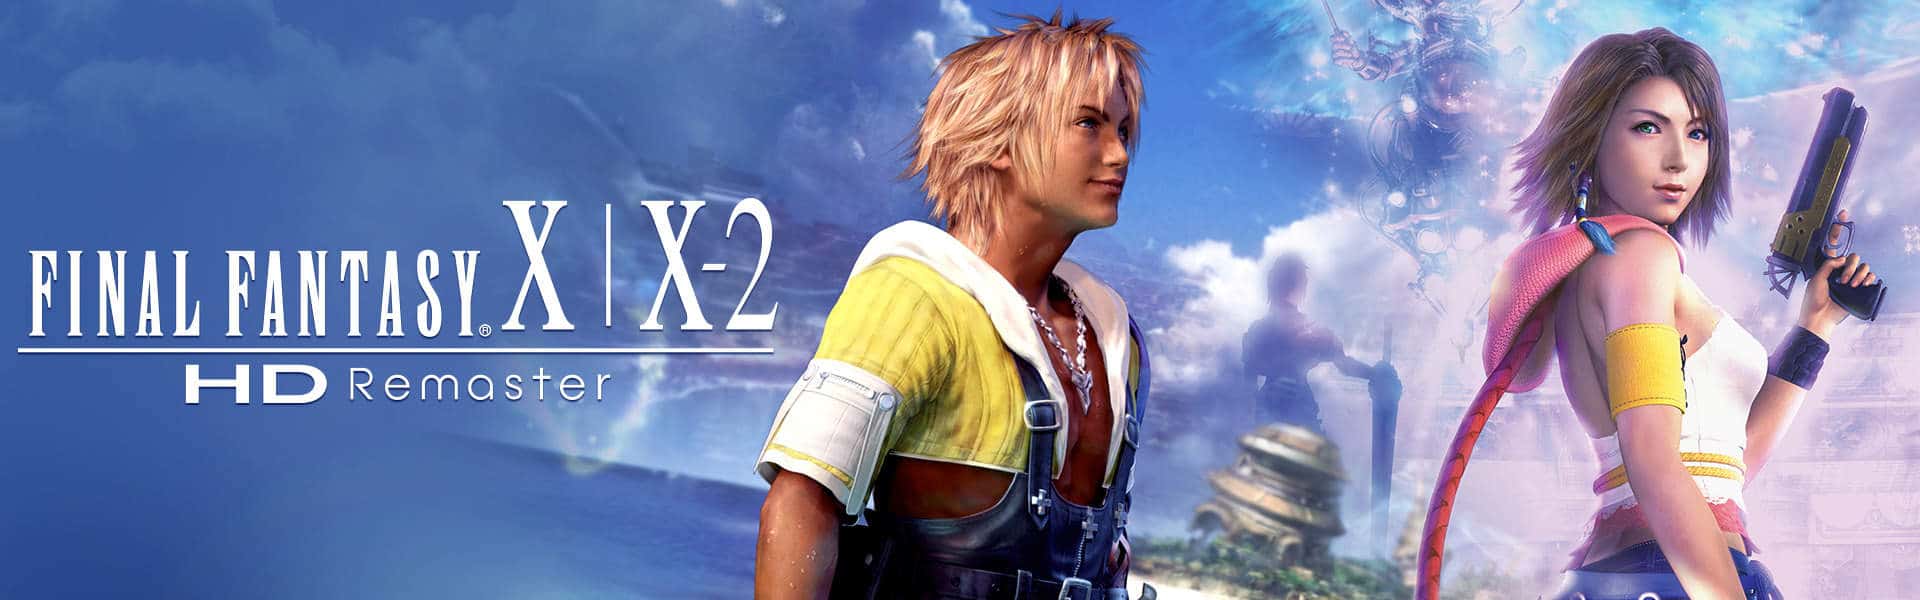 Final Fantasy X X 2 Hd Remaster Banner